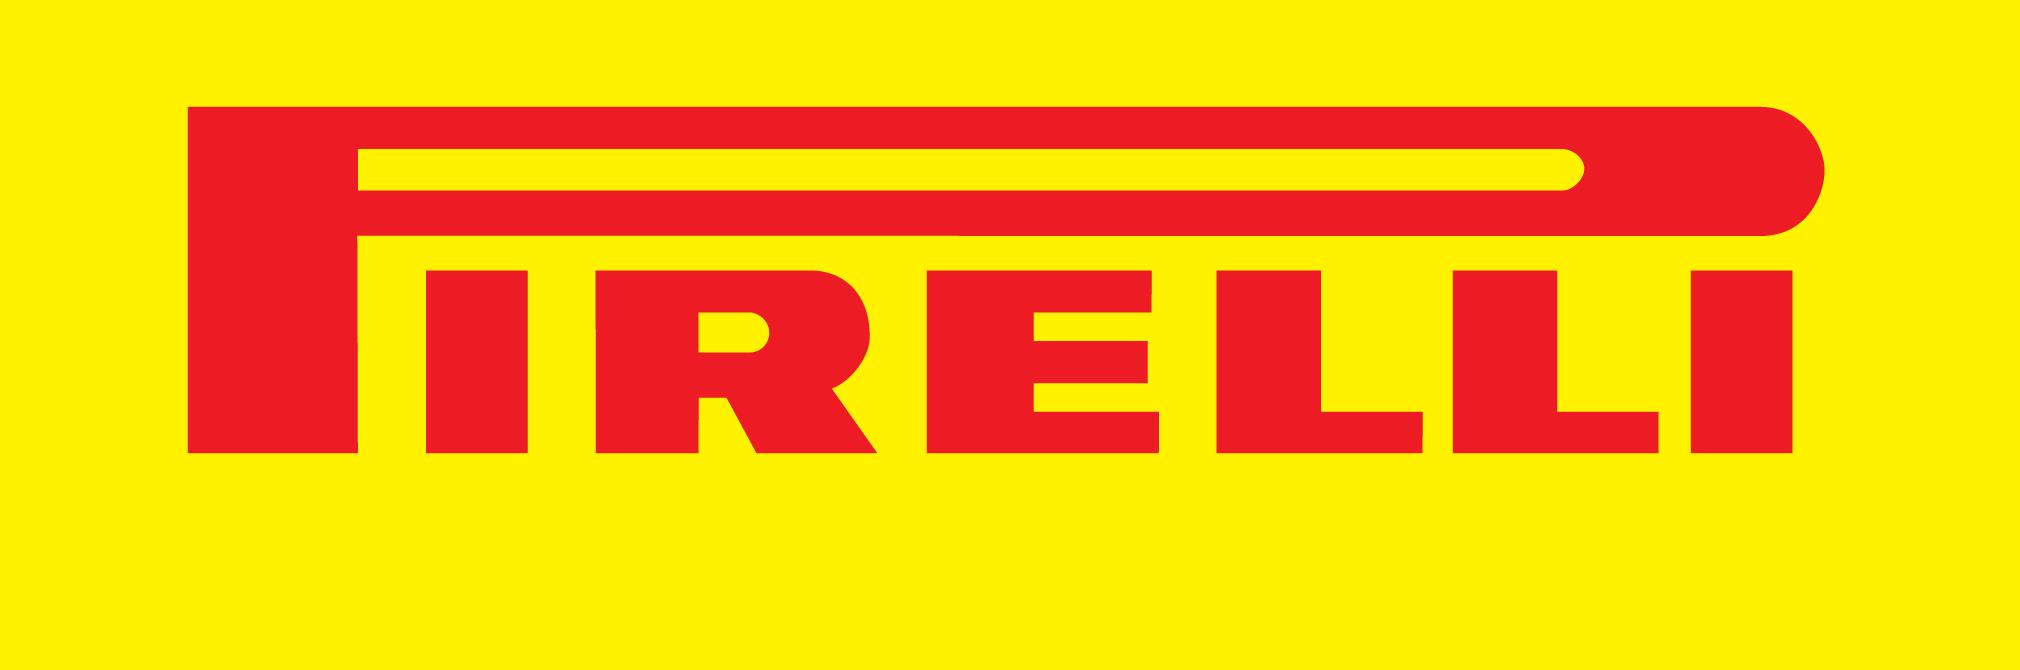 logo-pirelli-edit